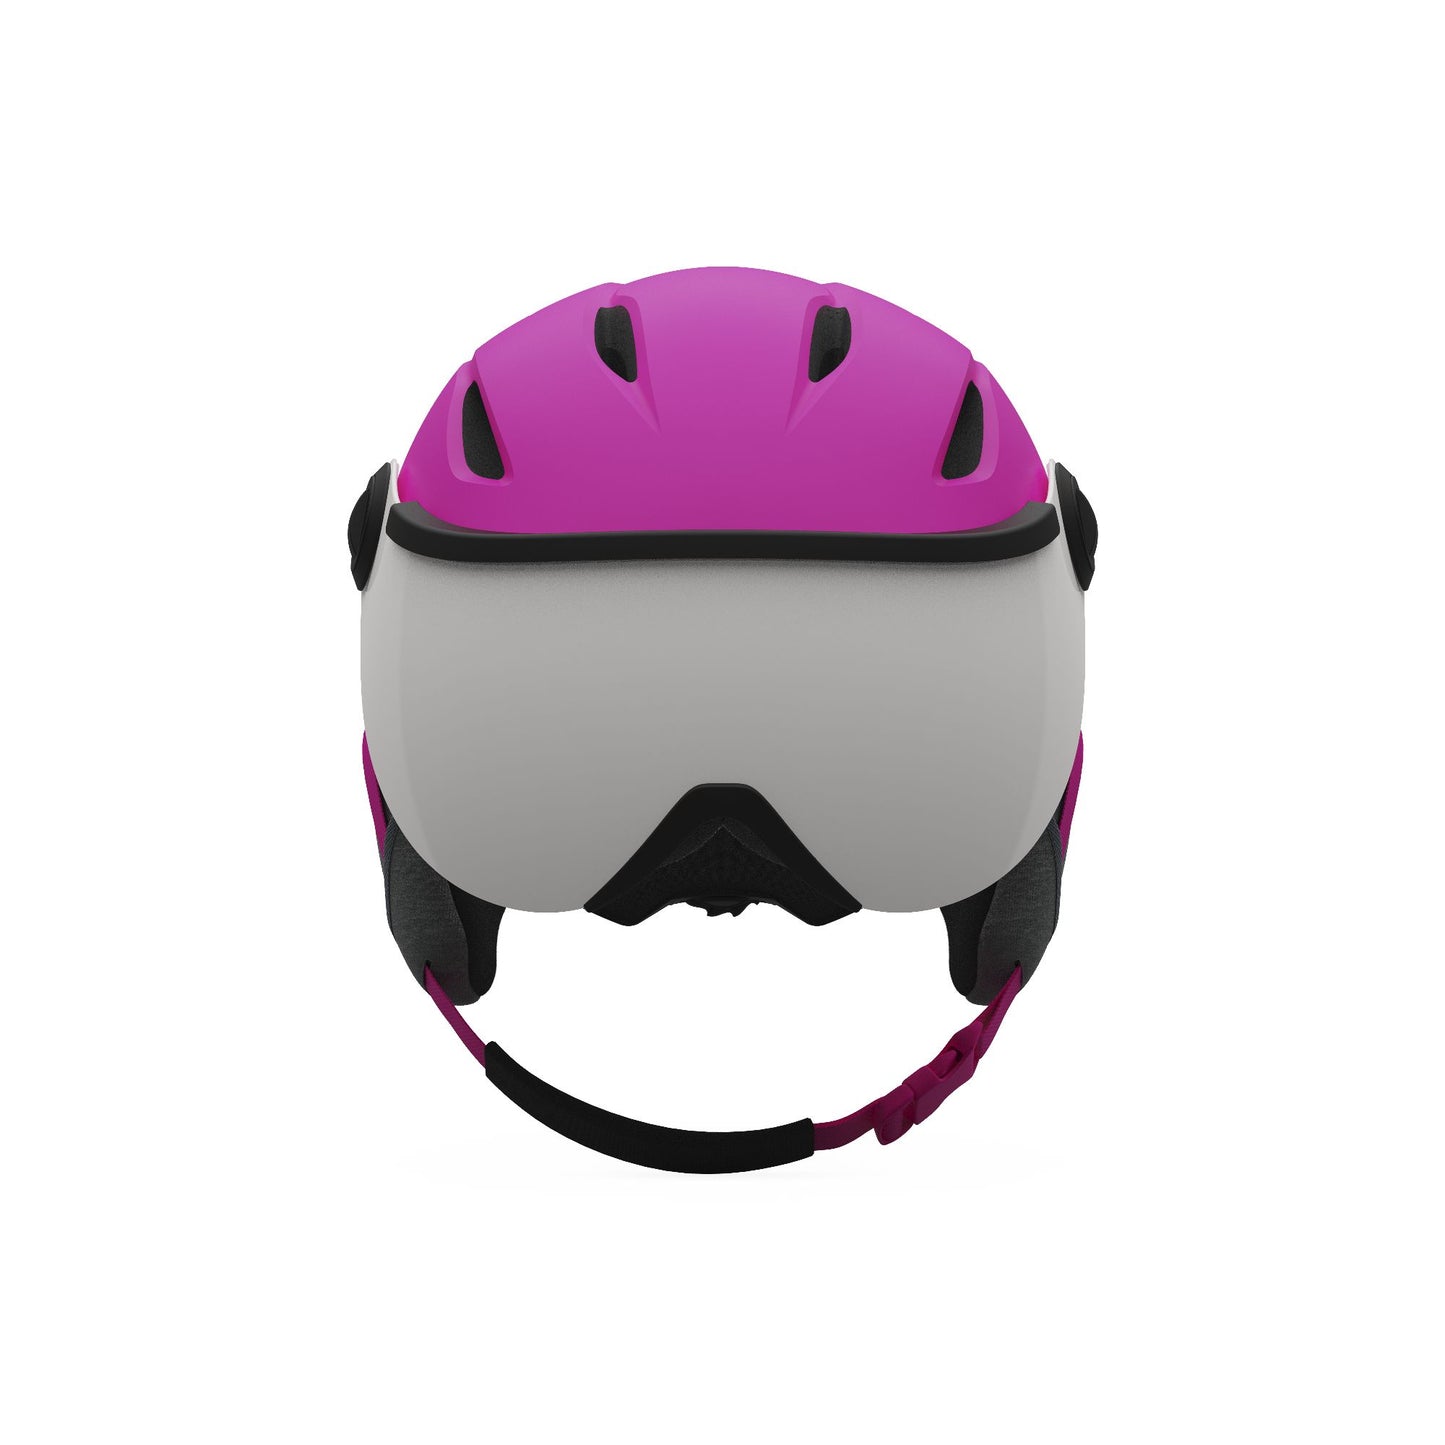 Giro Youth Buzz MIPS Helmet Matte Bright Pink Snow Helmets